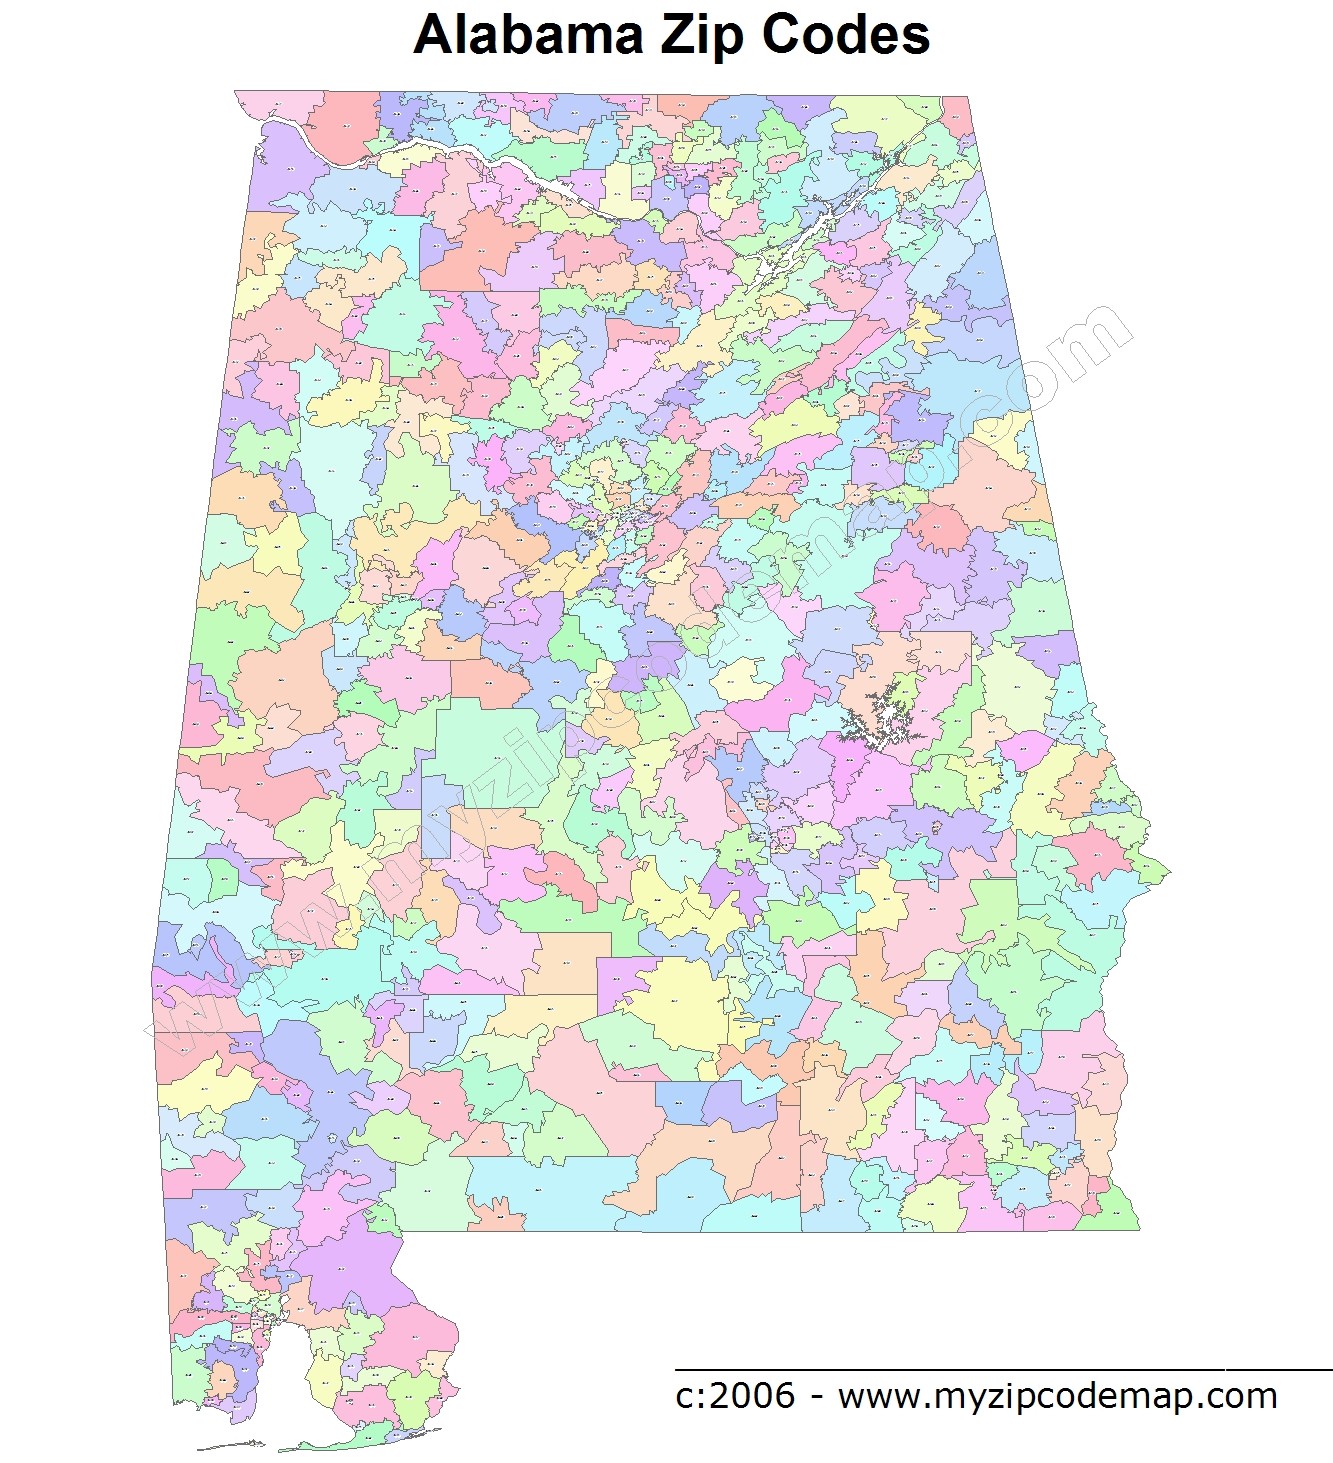 Alabama Zip Code Map In Excel Zip Codes List And Population Map Youtube ...